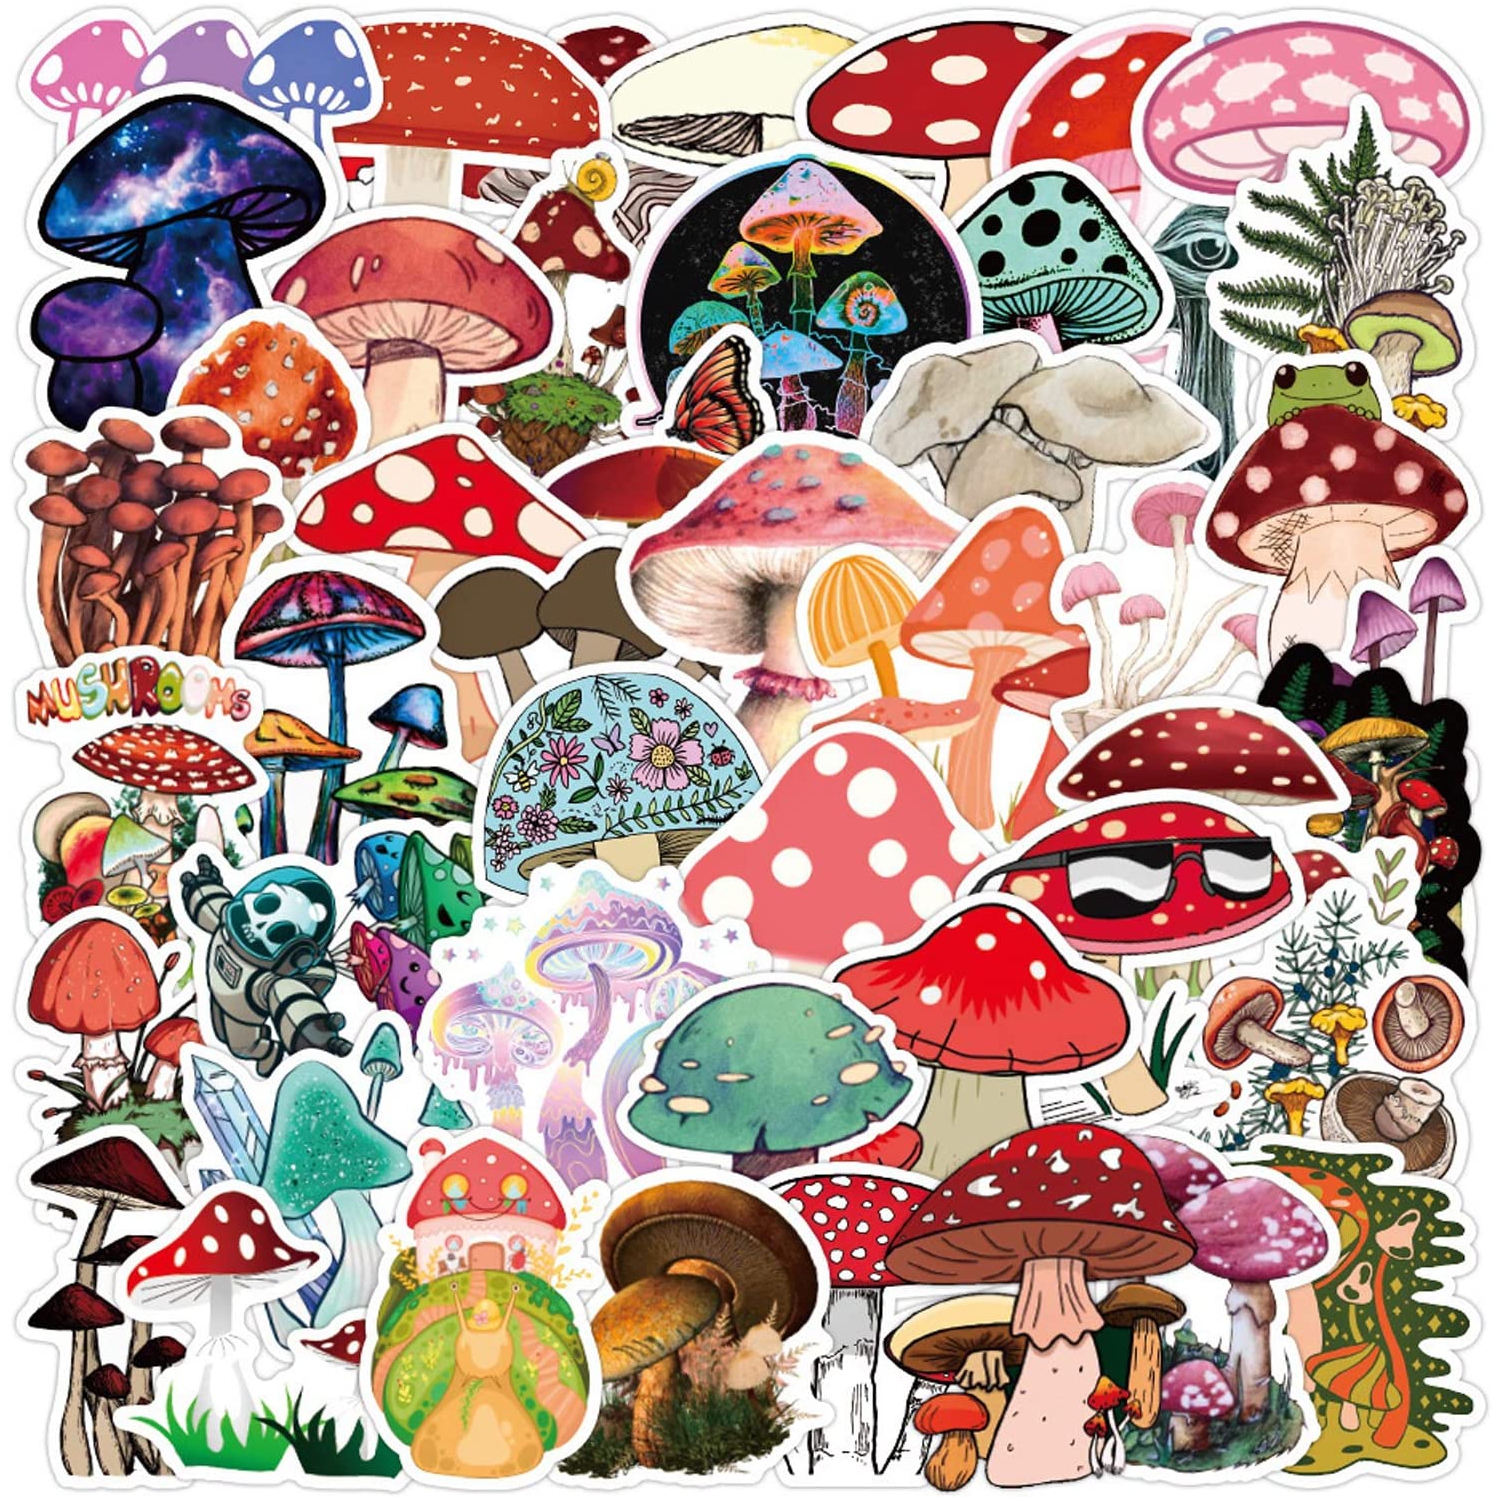 Mushroom Stickers,50 PCS Vinyl Waterproof Stickers for Laptop,Skateboard,Water Bottles,Computer,Phone,Guitar,Bat